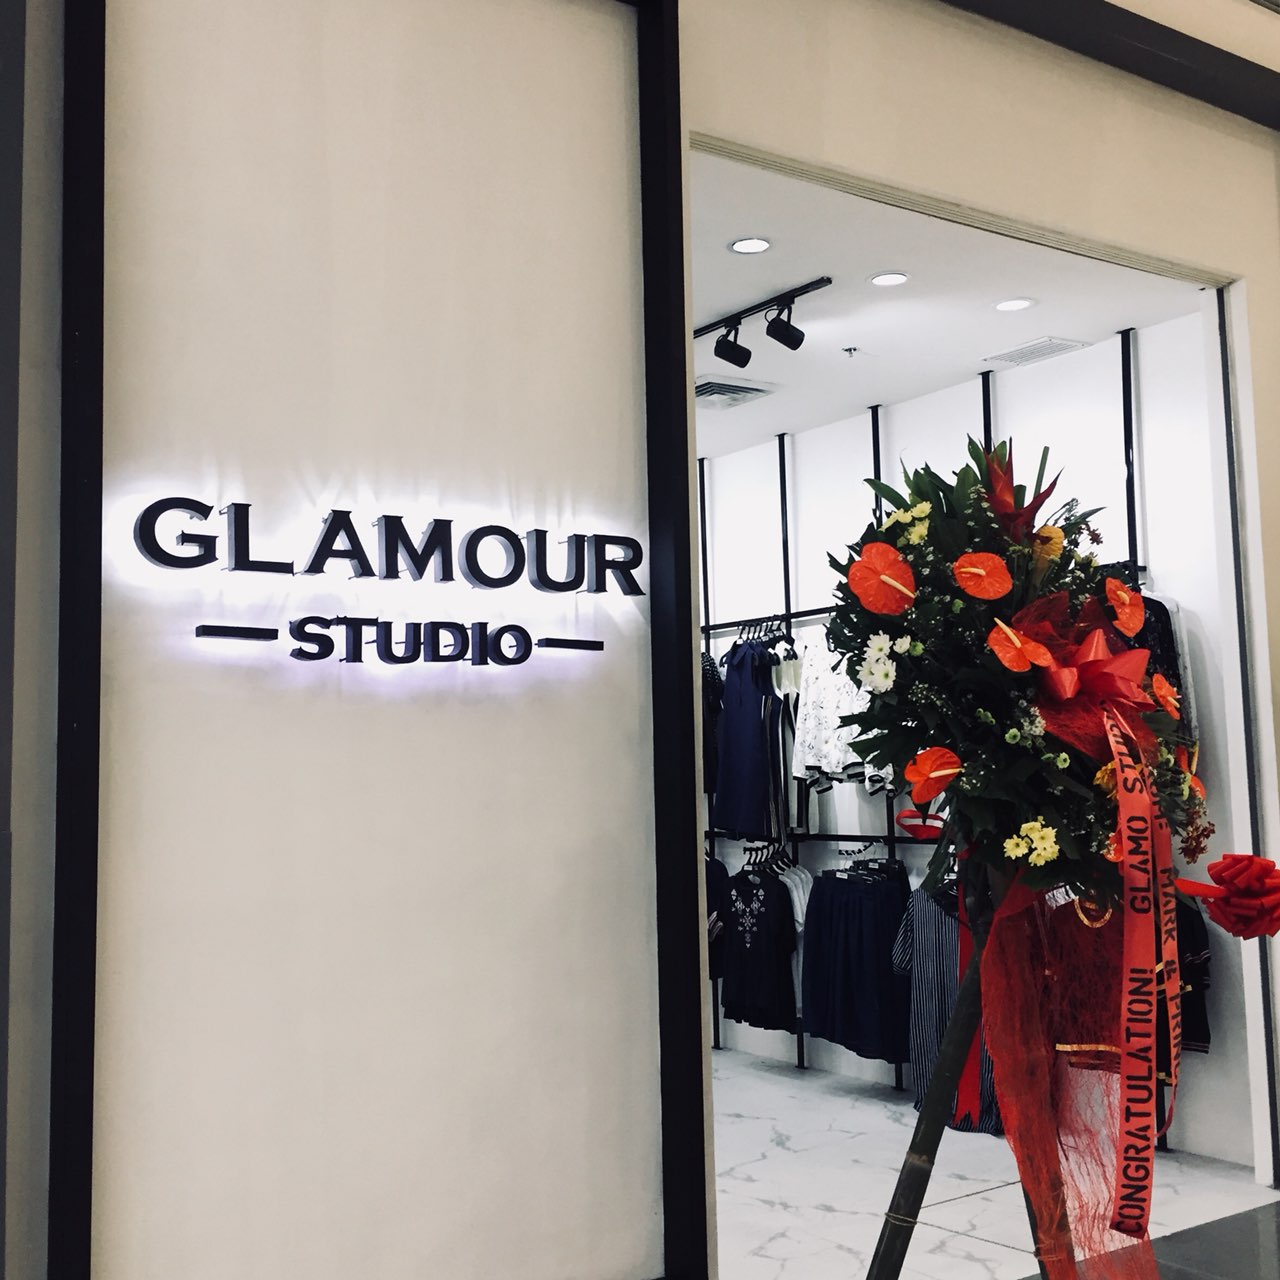 GLAMOUR STUDIO OPENS AT SM CITY SAN JOSE DEL MONTE - Chasingcuriousalice